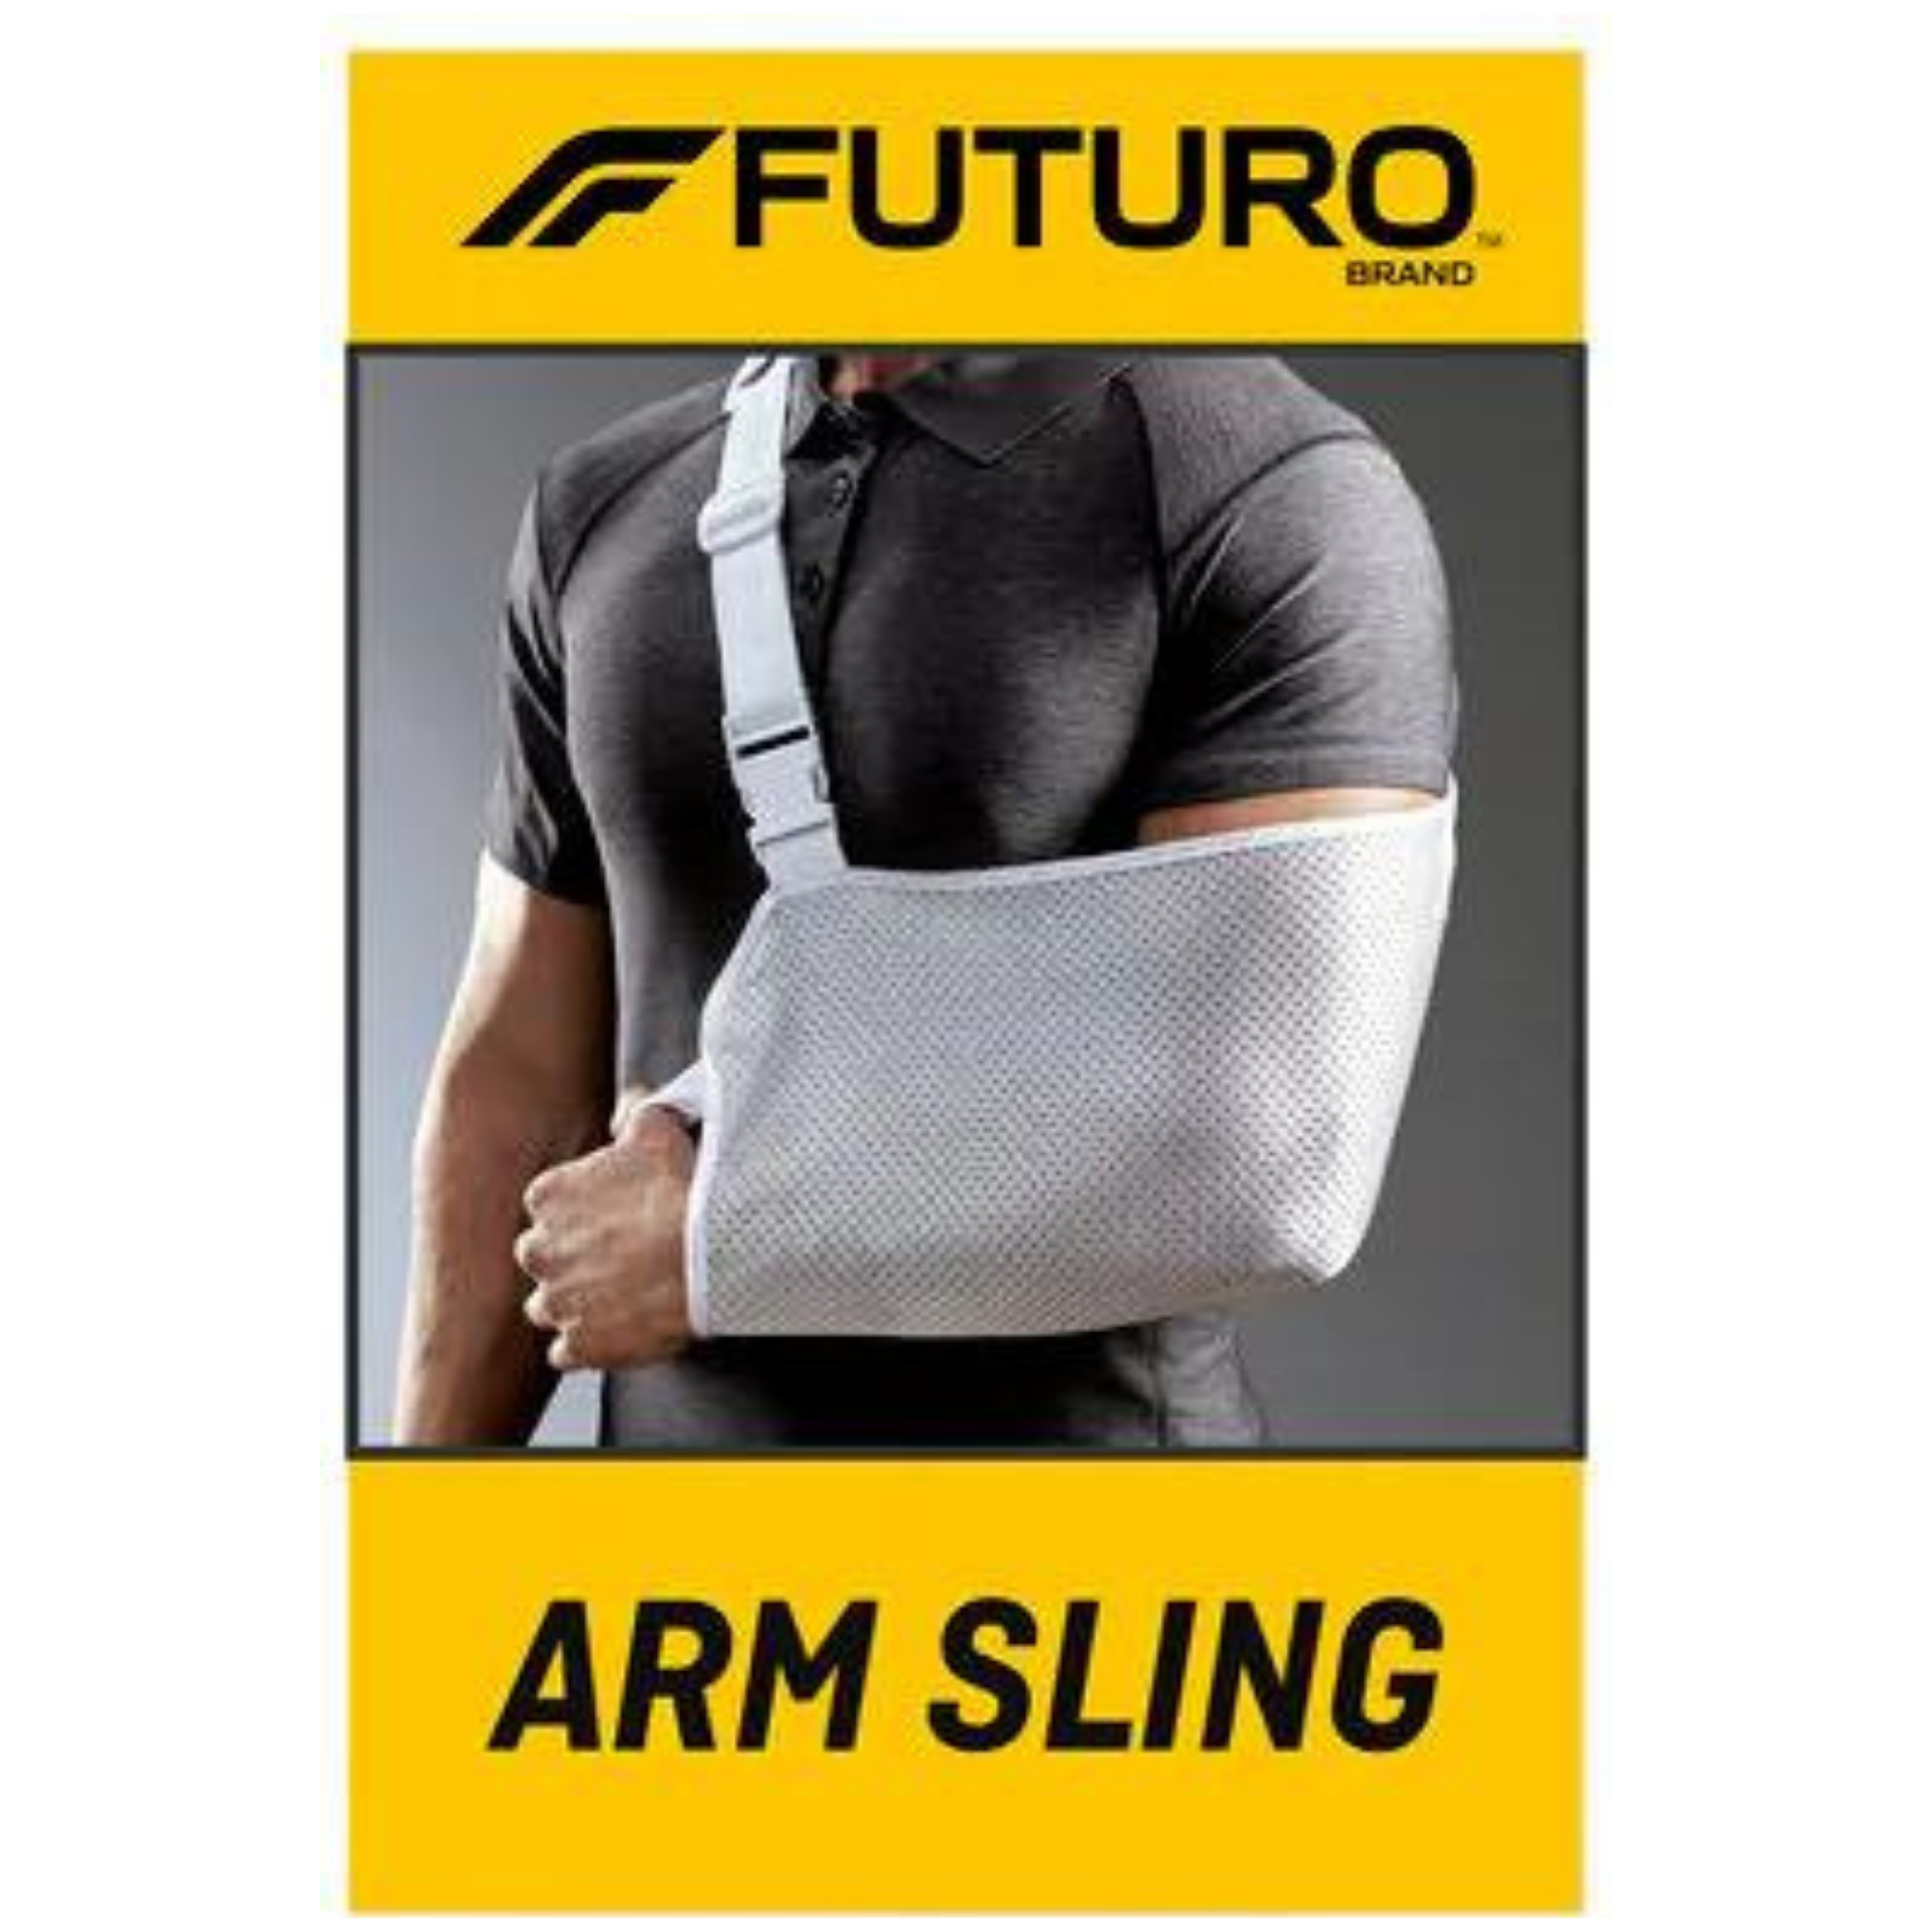 Futuro Arm Sling 46204ENR Adult size